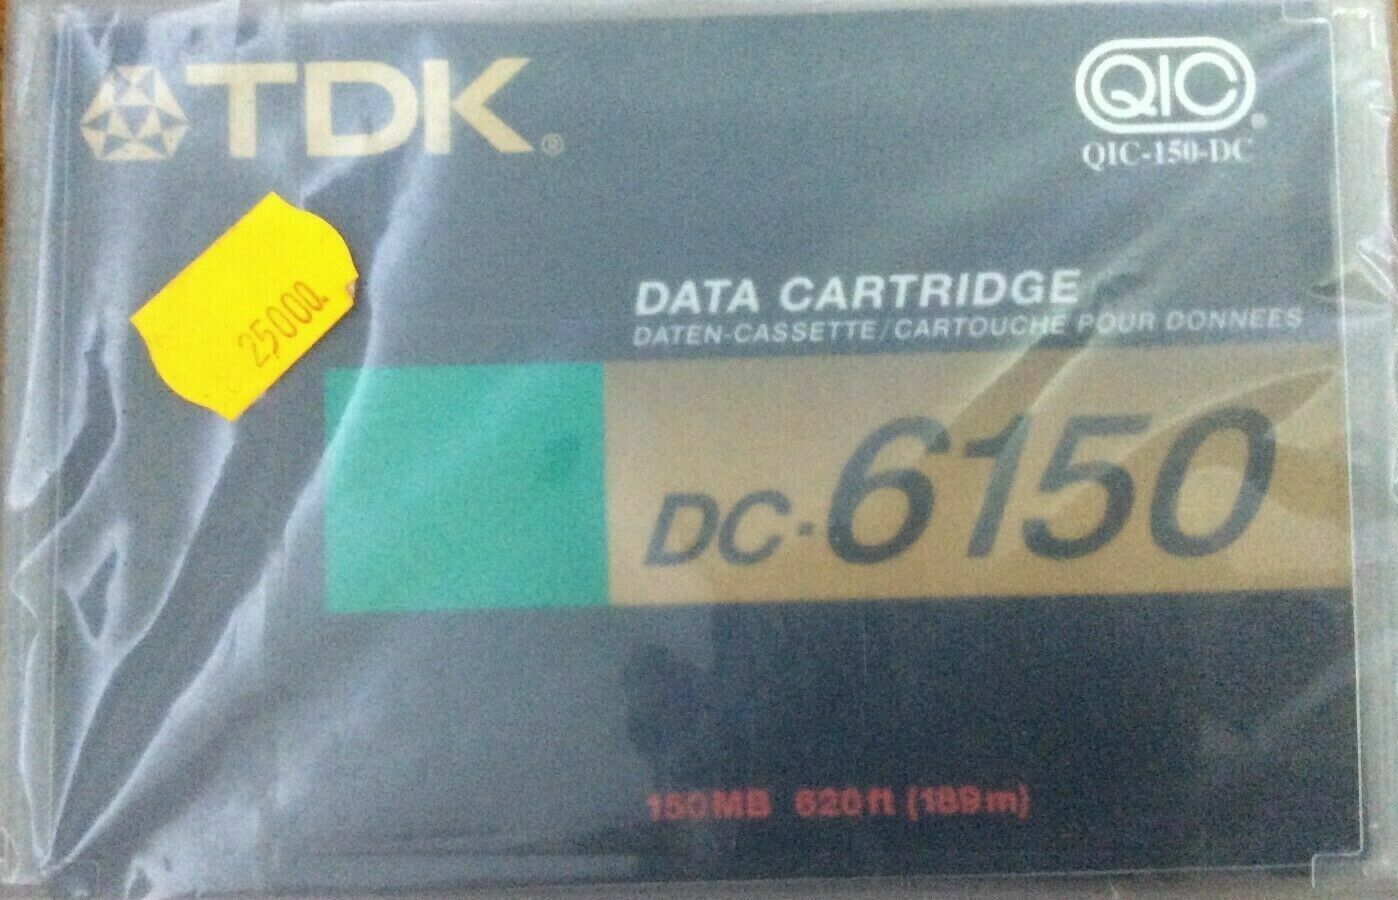 TDK Dc 6150 Cartridge Data Cartridge Reseed